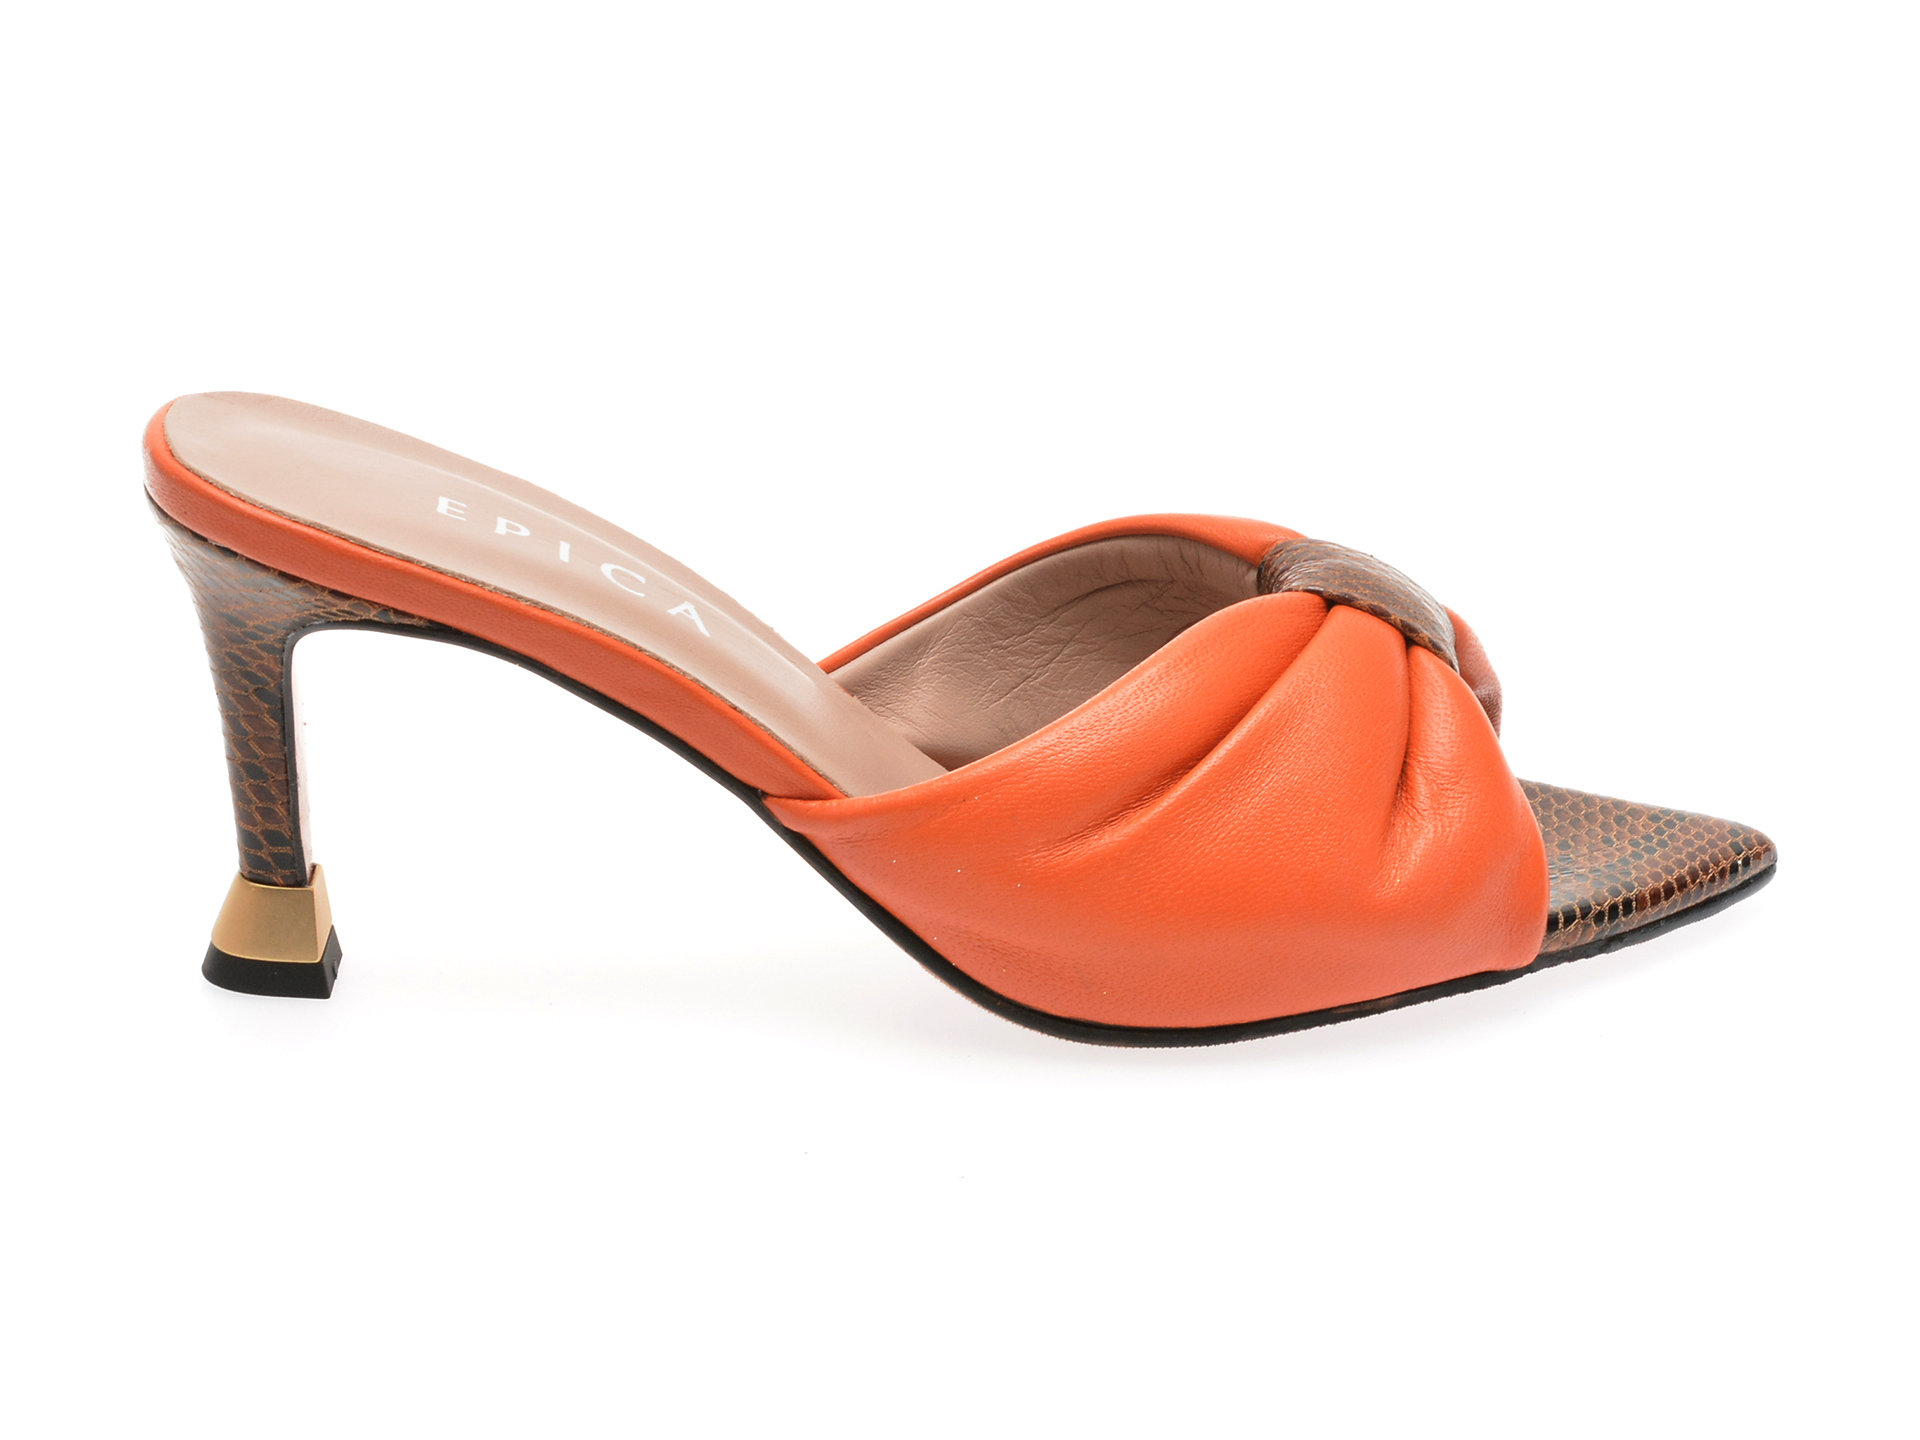 Papuci casual EPICA portocalii, 1278, din piele naturala